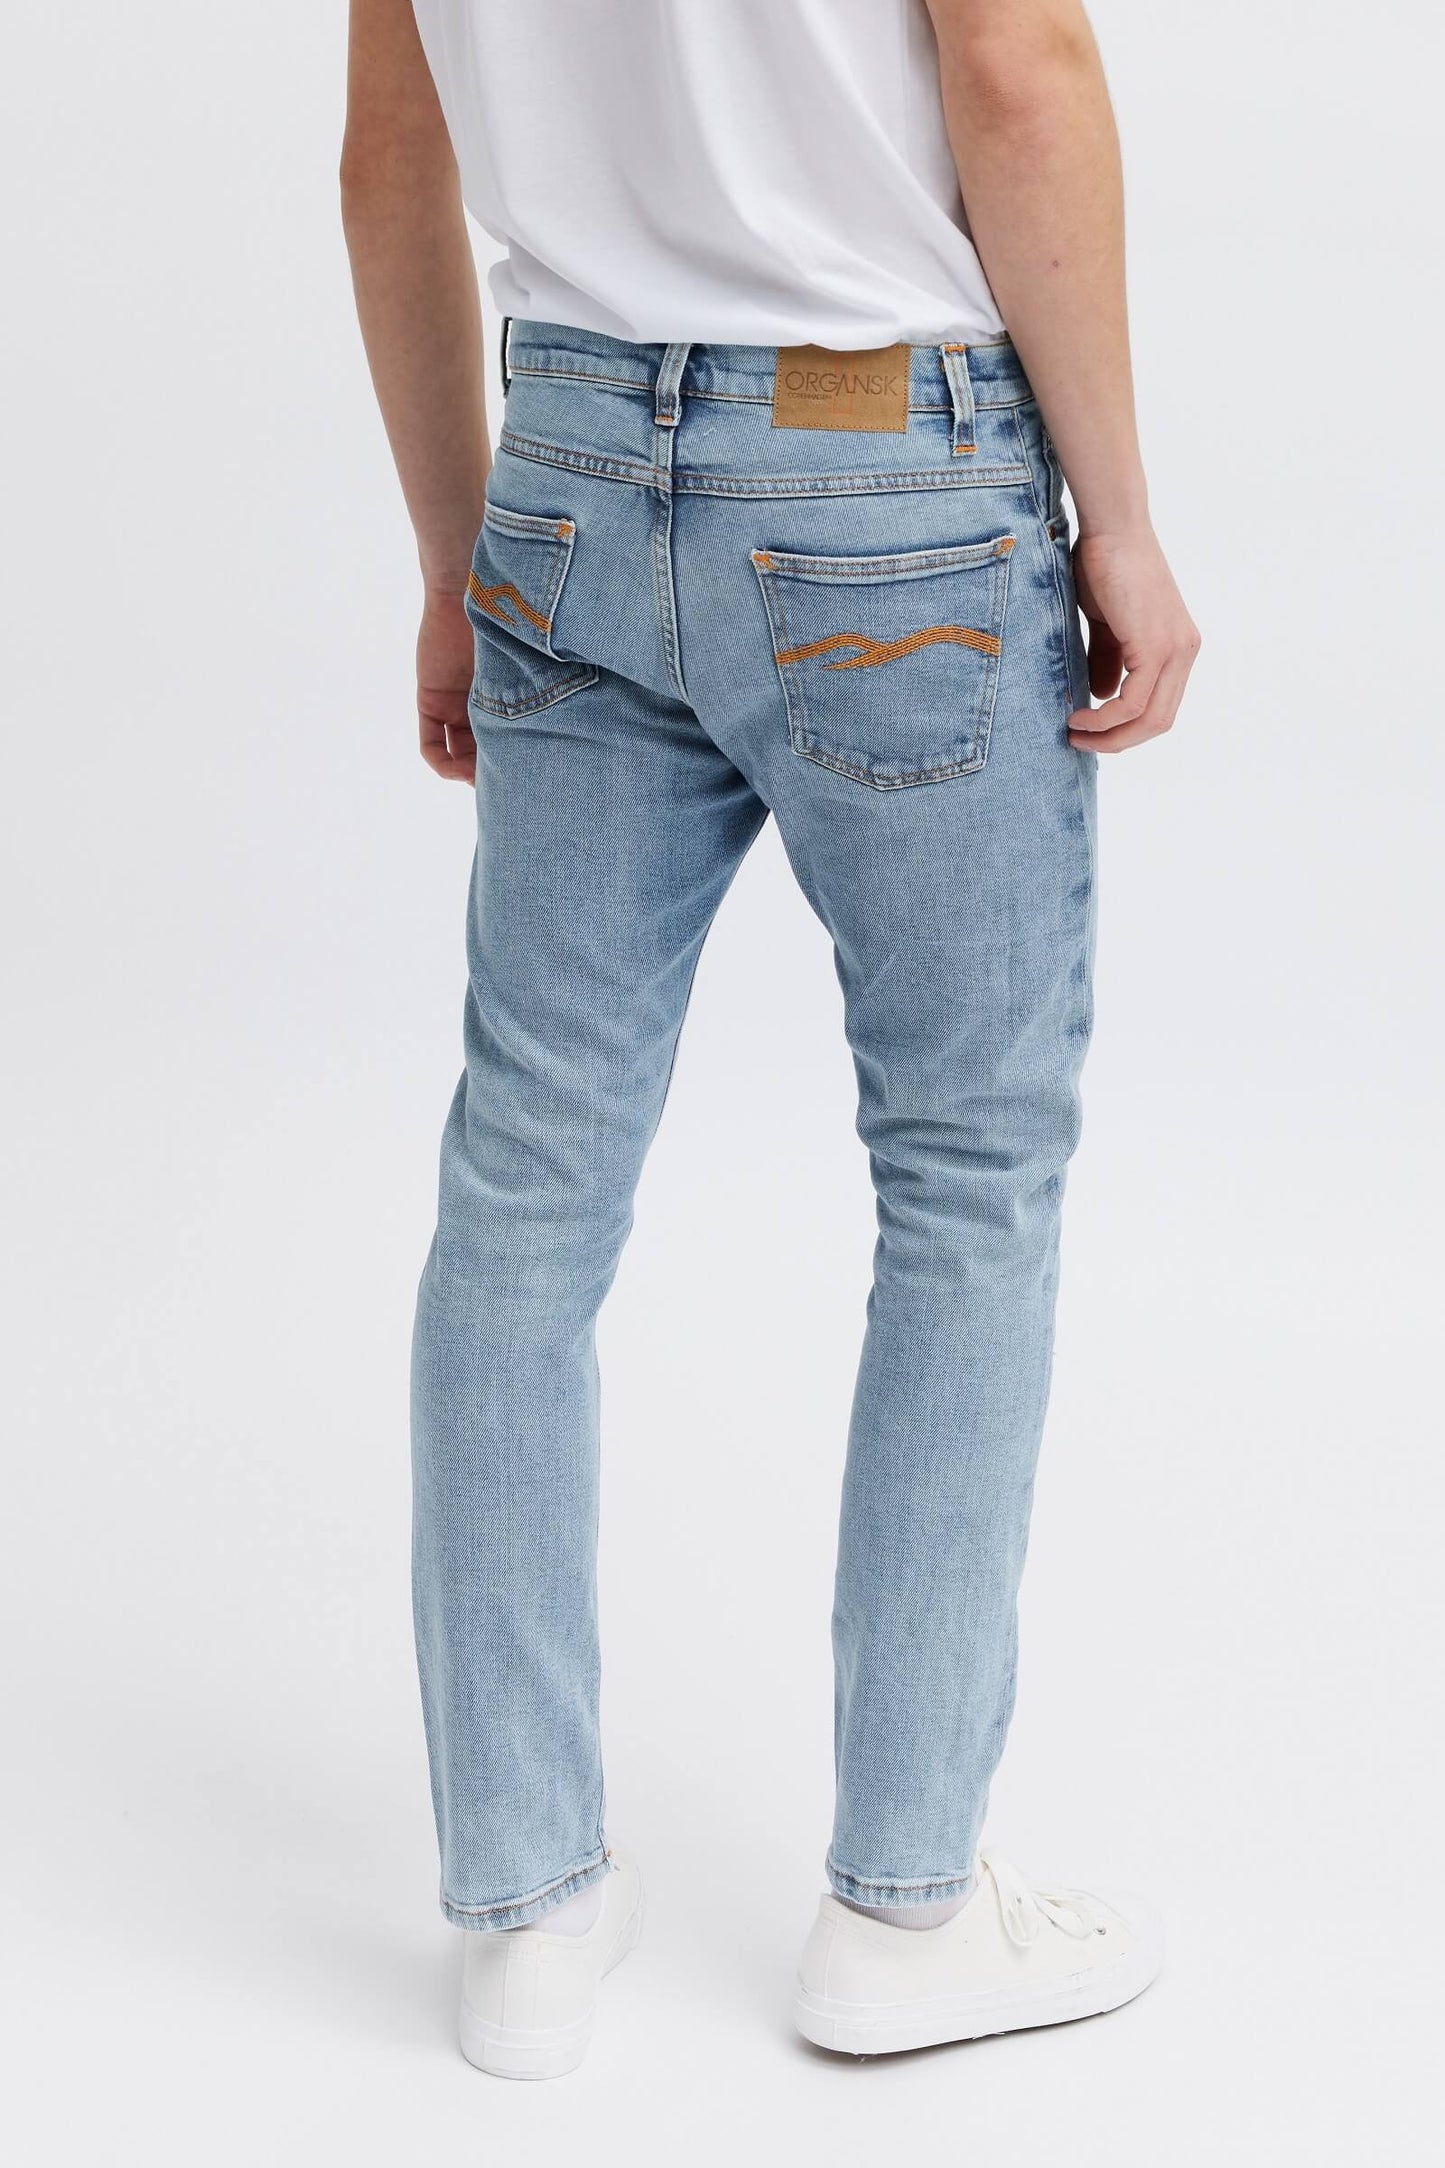 Organic denim jeans - Men's Tapered Fit